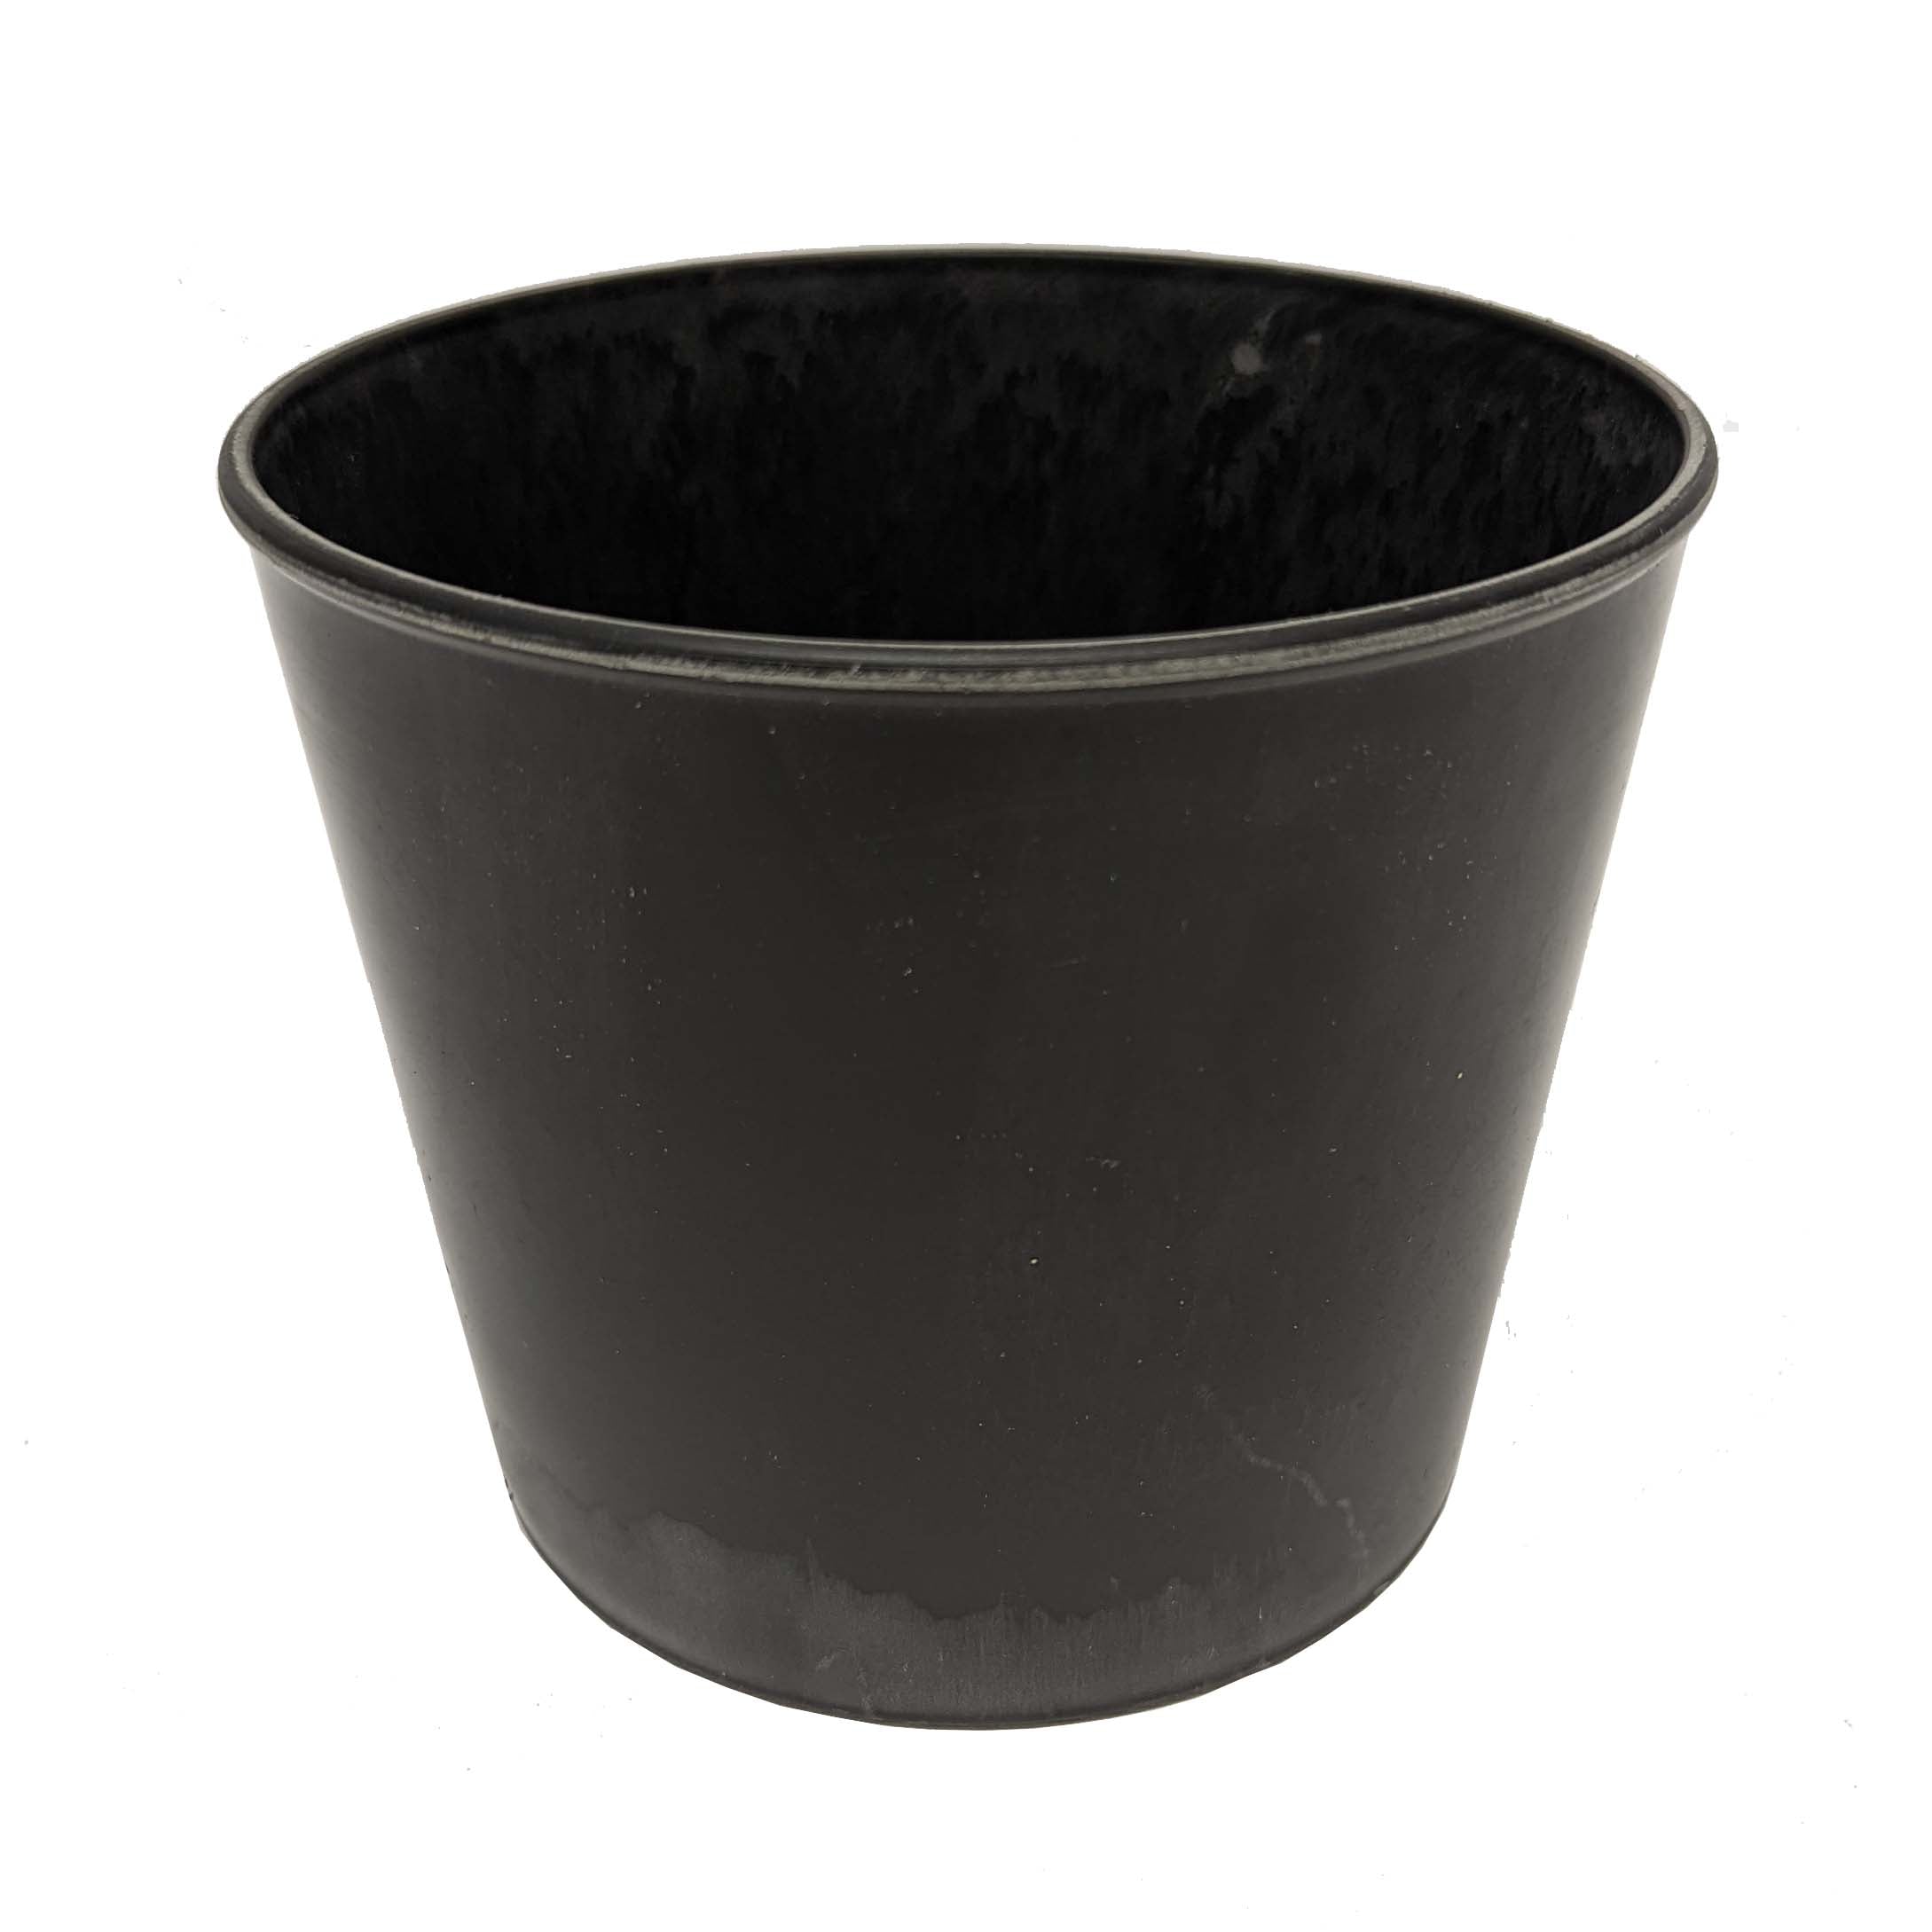 Smooth Black Plant Pot - Acrylic Plant Pot